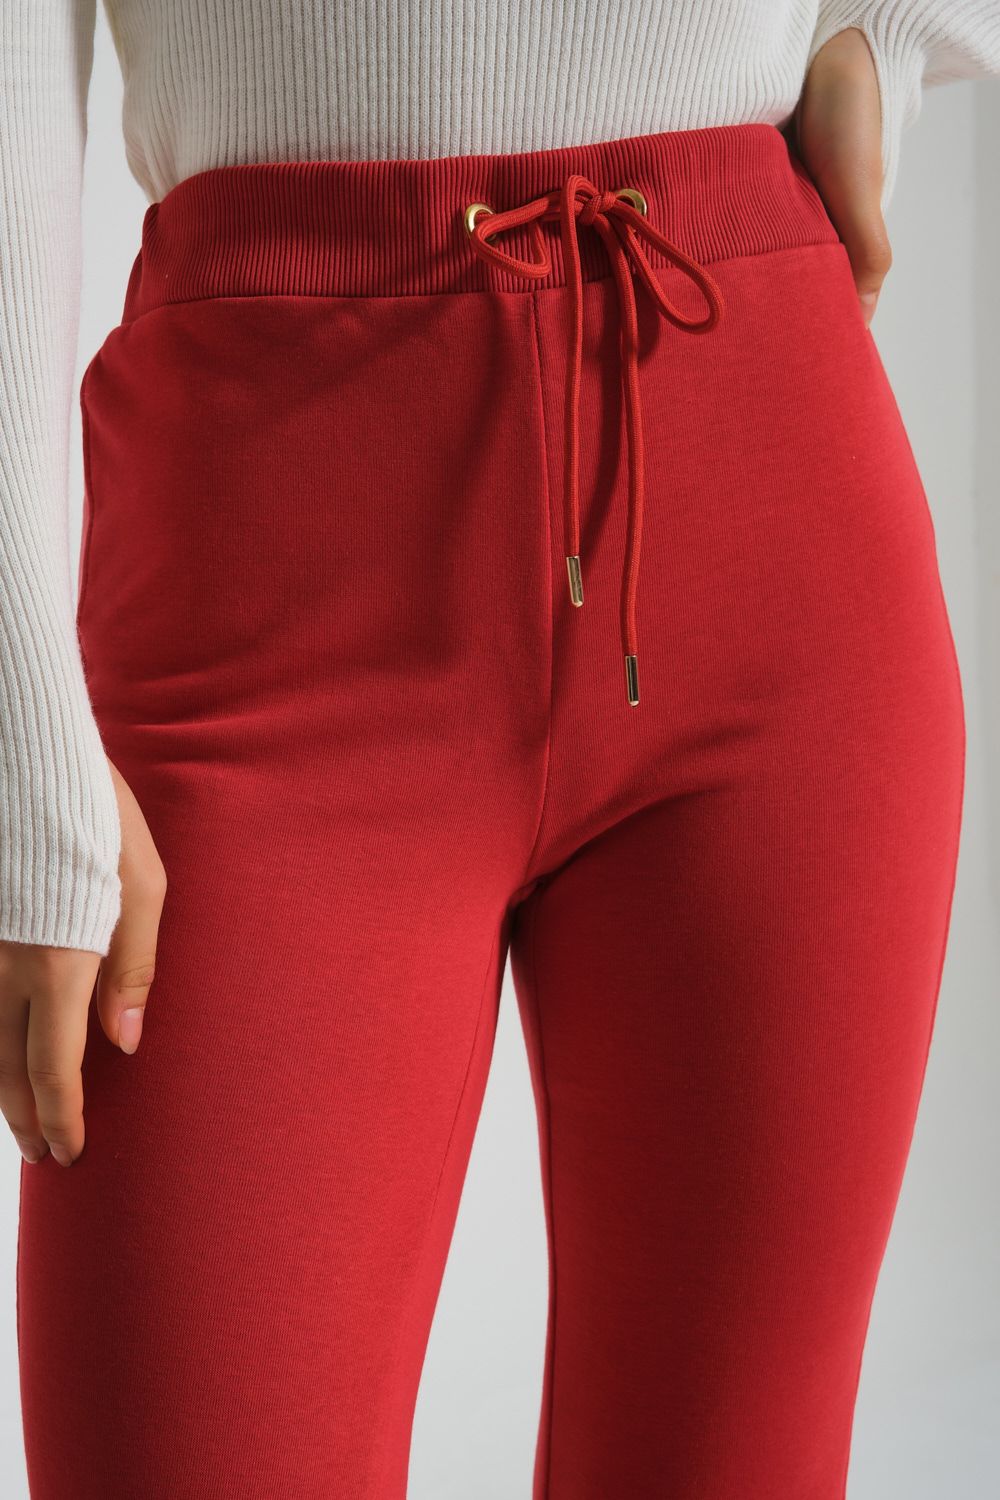 Garnili Üç İplik Kırmızı Pantolon